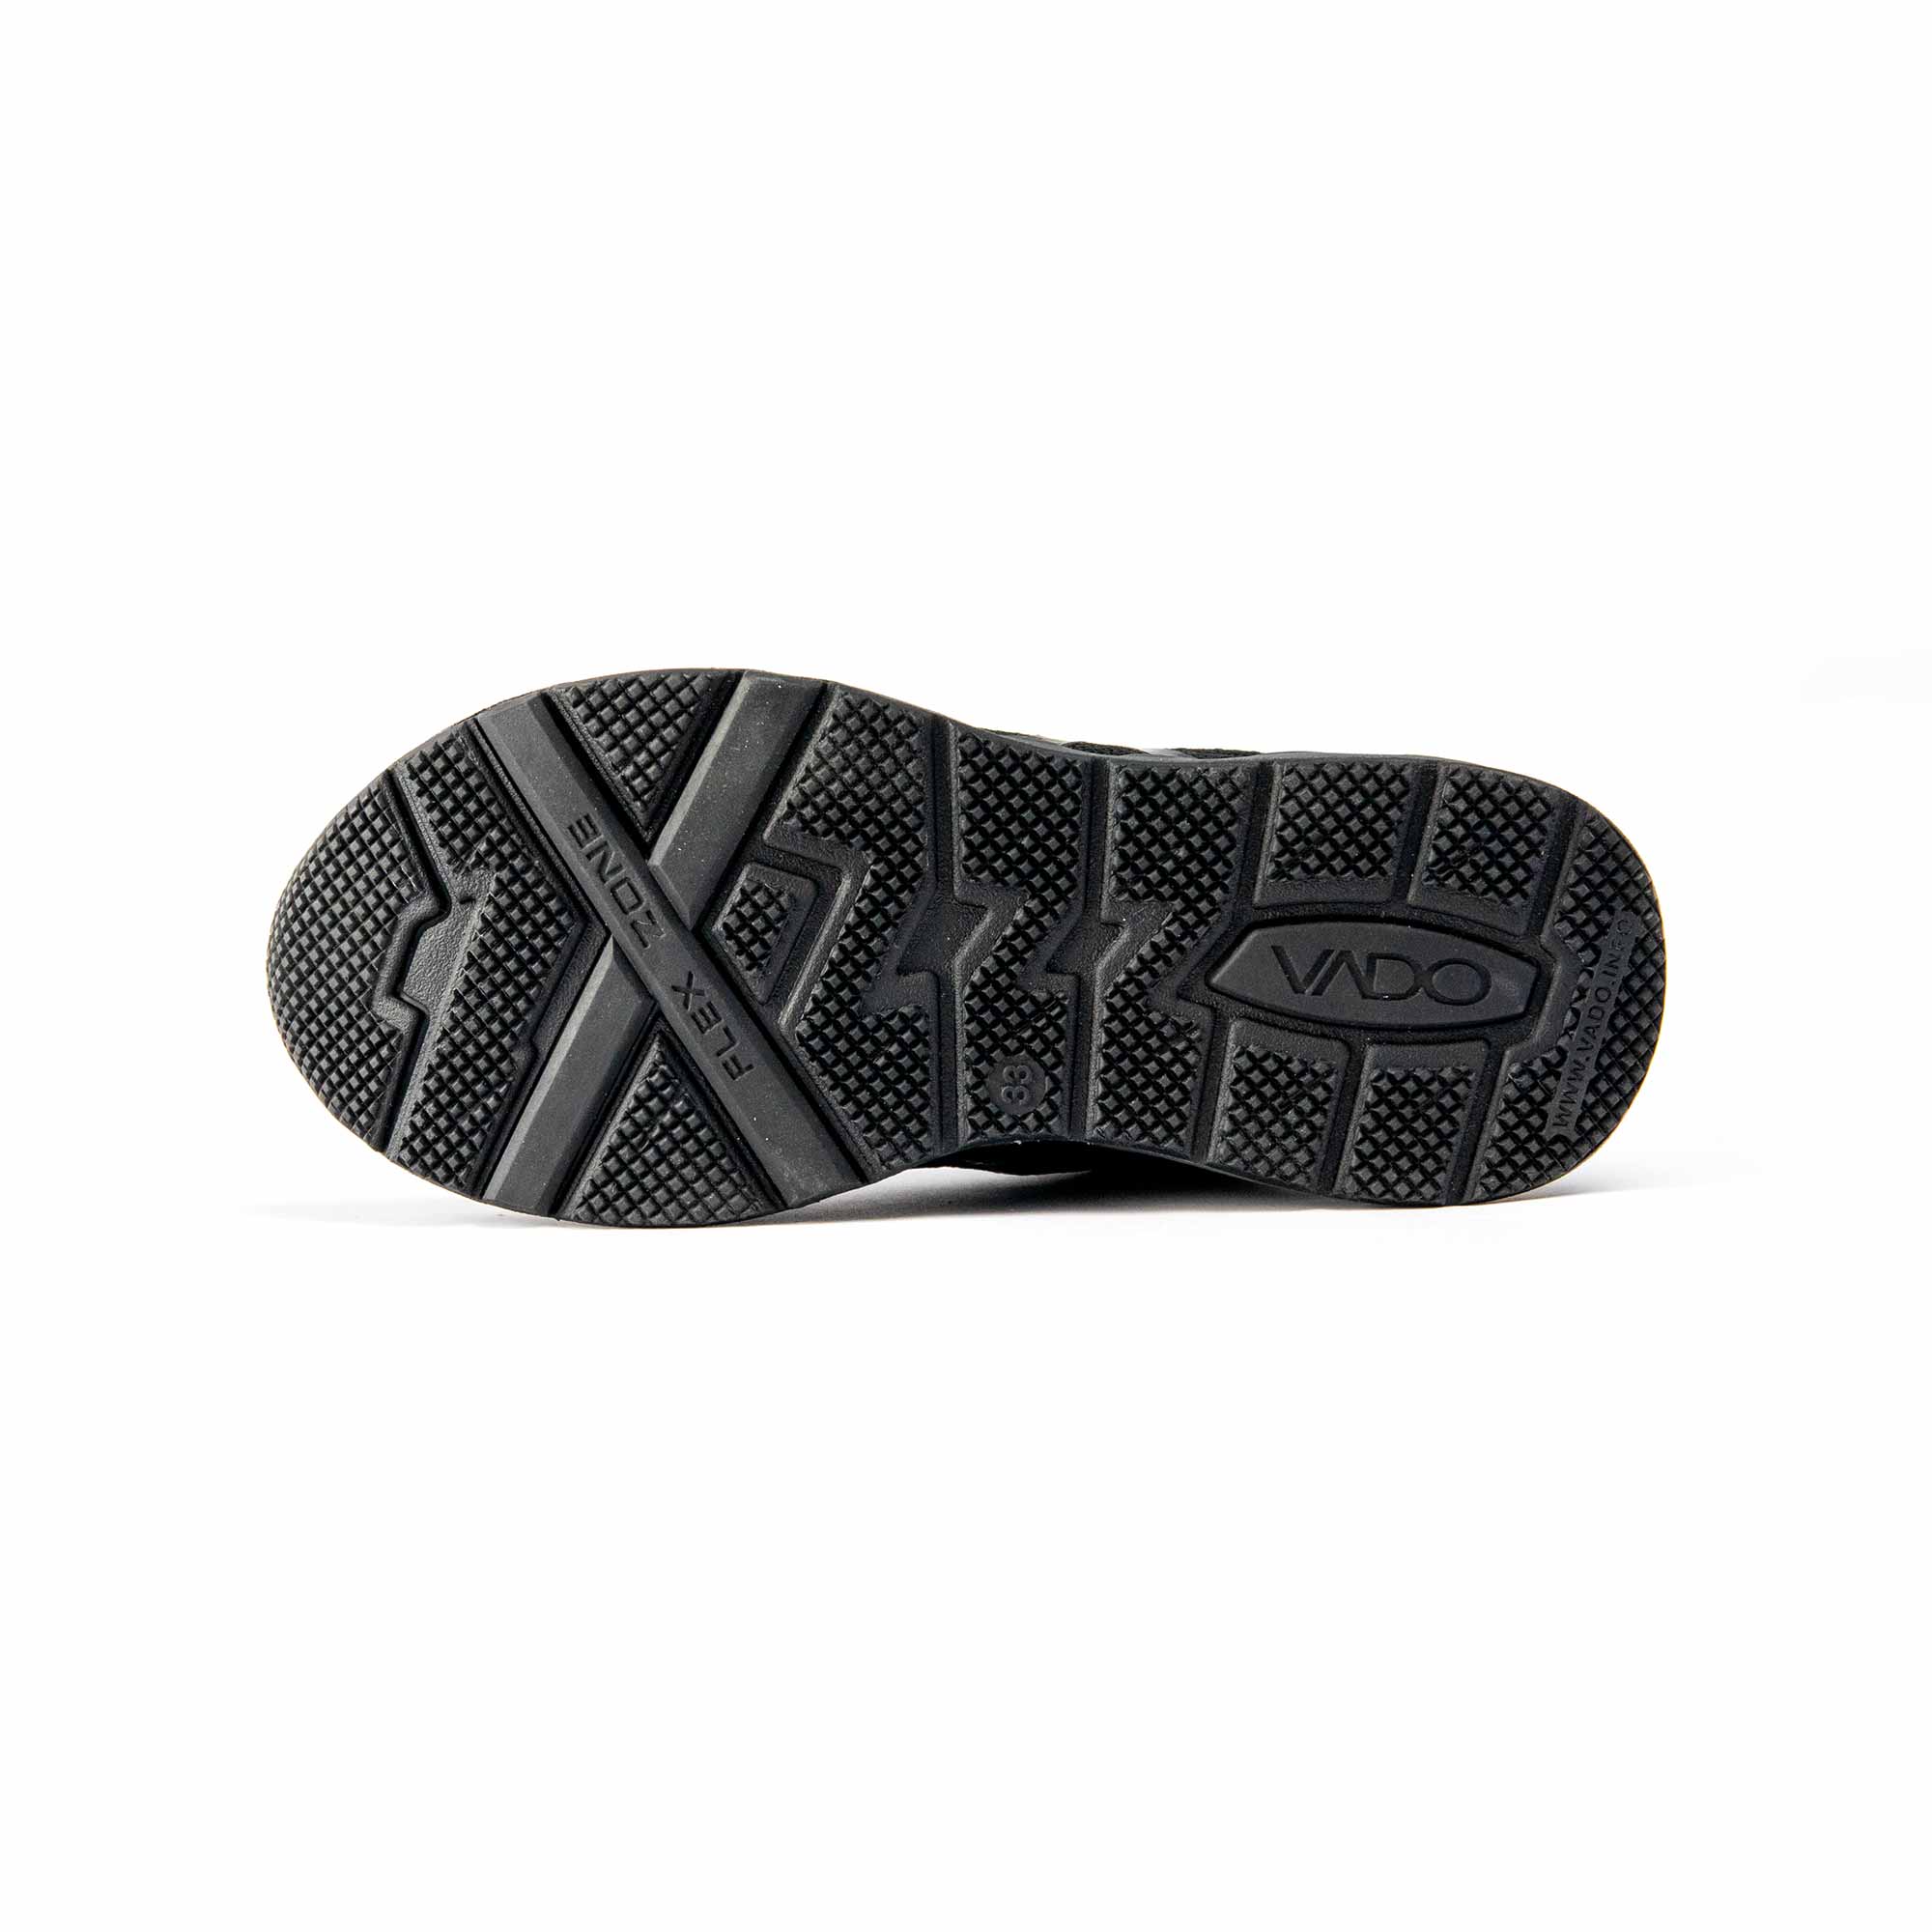 VADO Kinder Sneaker atmungsaktiv AIR Lo BOA GTX Surround black Schuhsohle